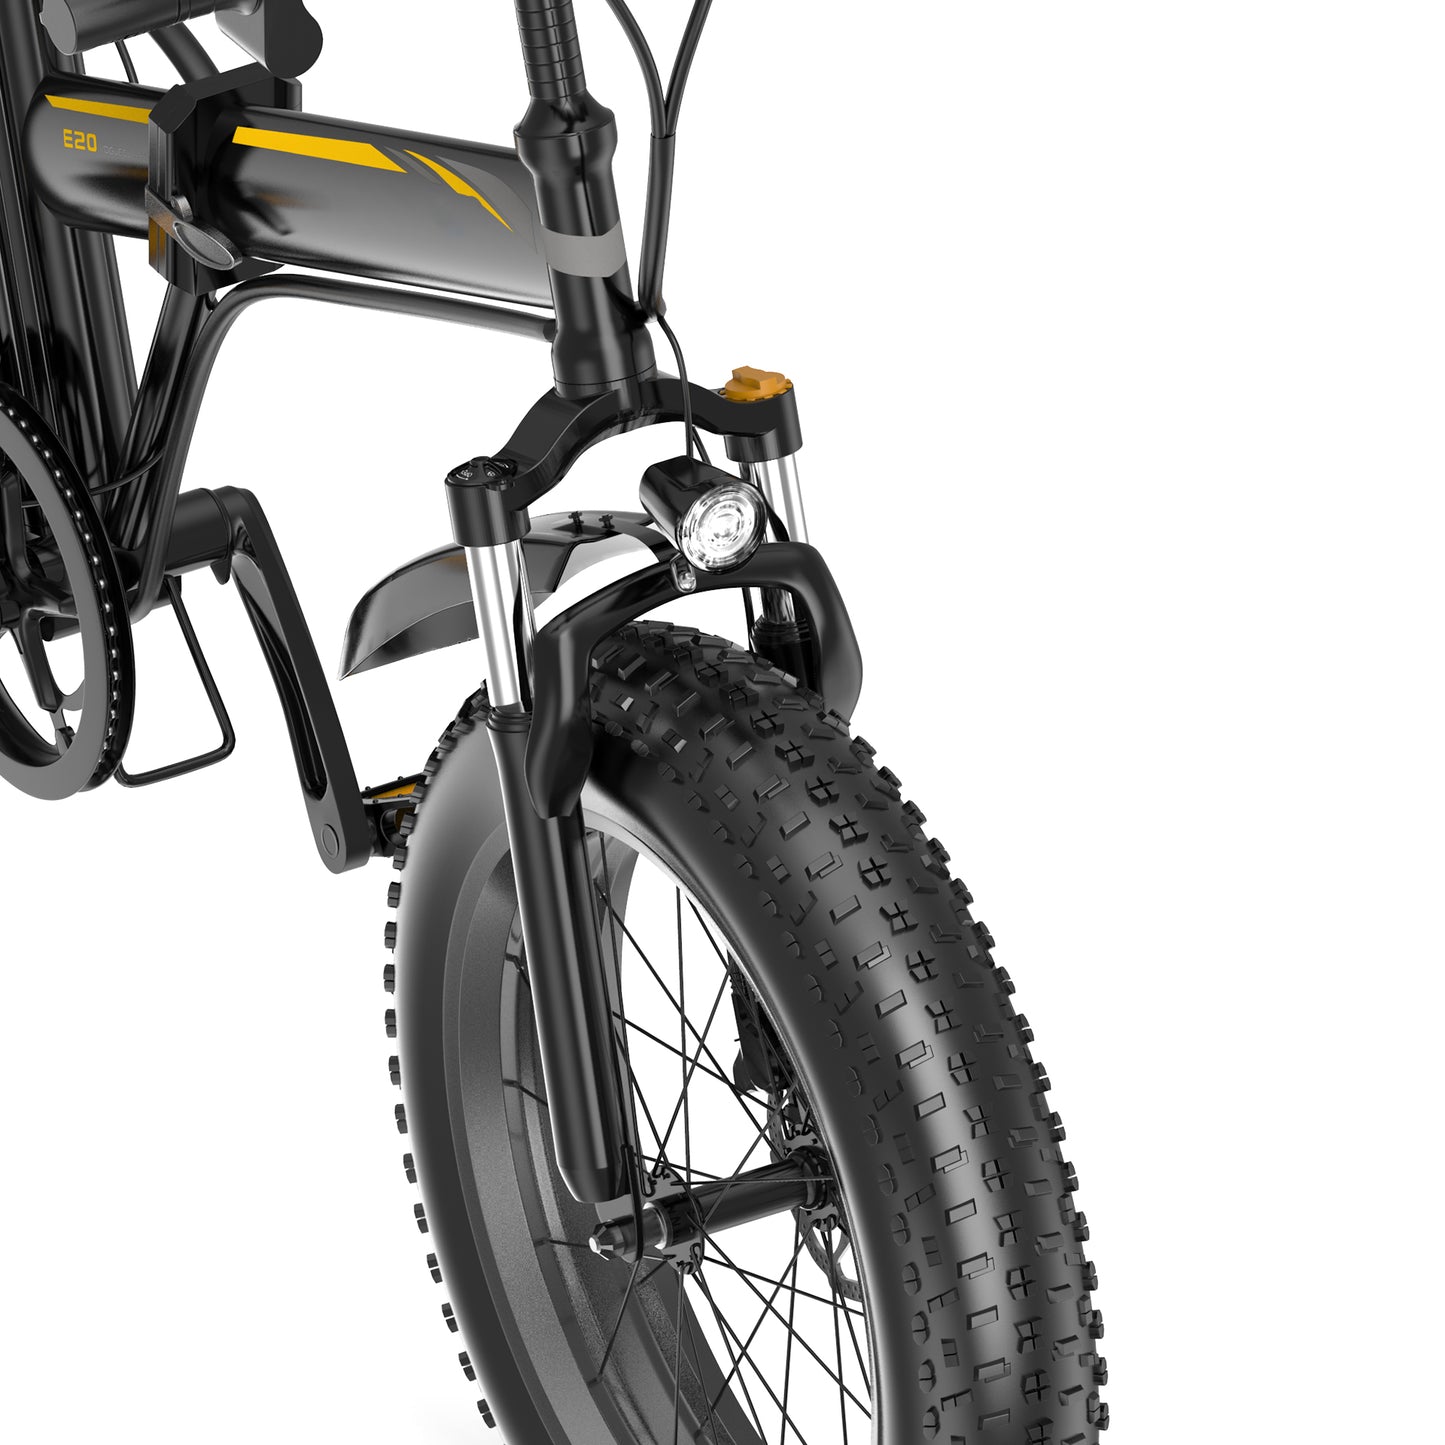 Janobike E20 Bicicletta elettrica per adulti Pieghevole 20 "x 4.0 Bicicletta elettrica per pneumatici da neve con motore da 500 W Batteria da 48 V 12,8 Ah